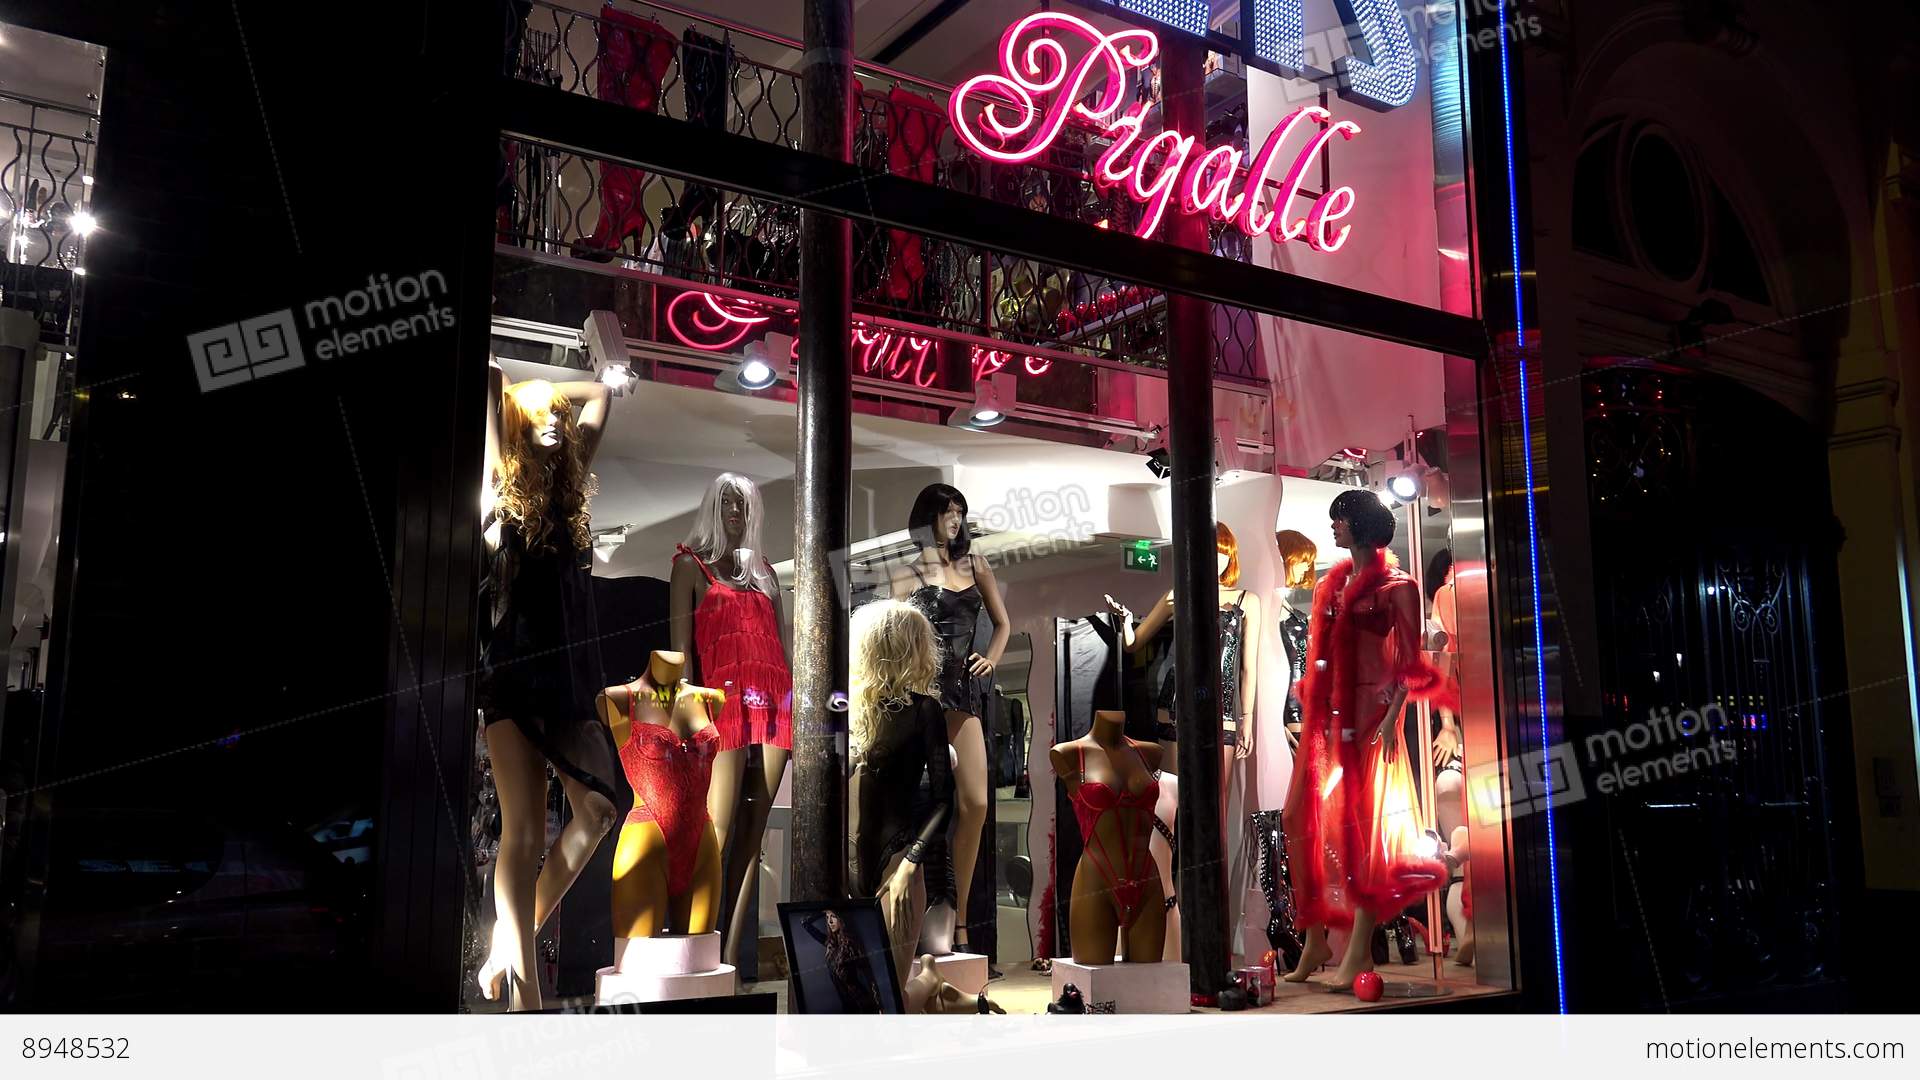 France In Vadodara Sex Shops